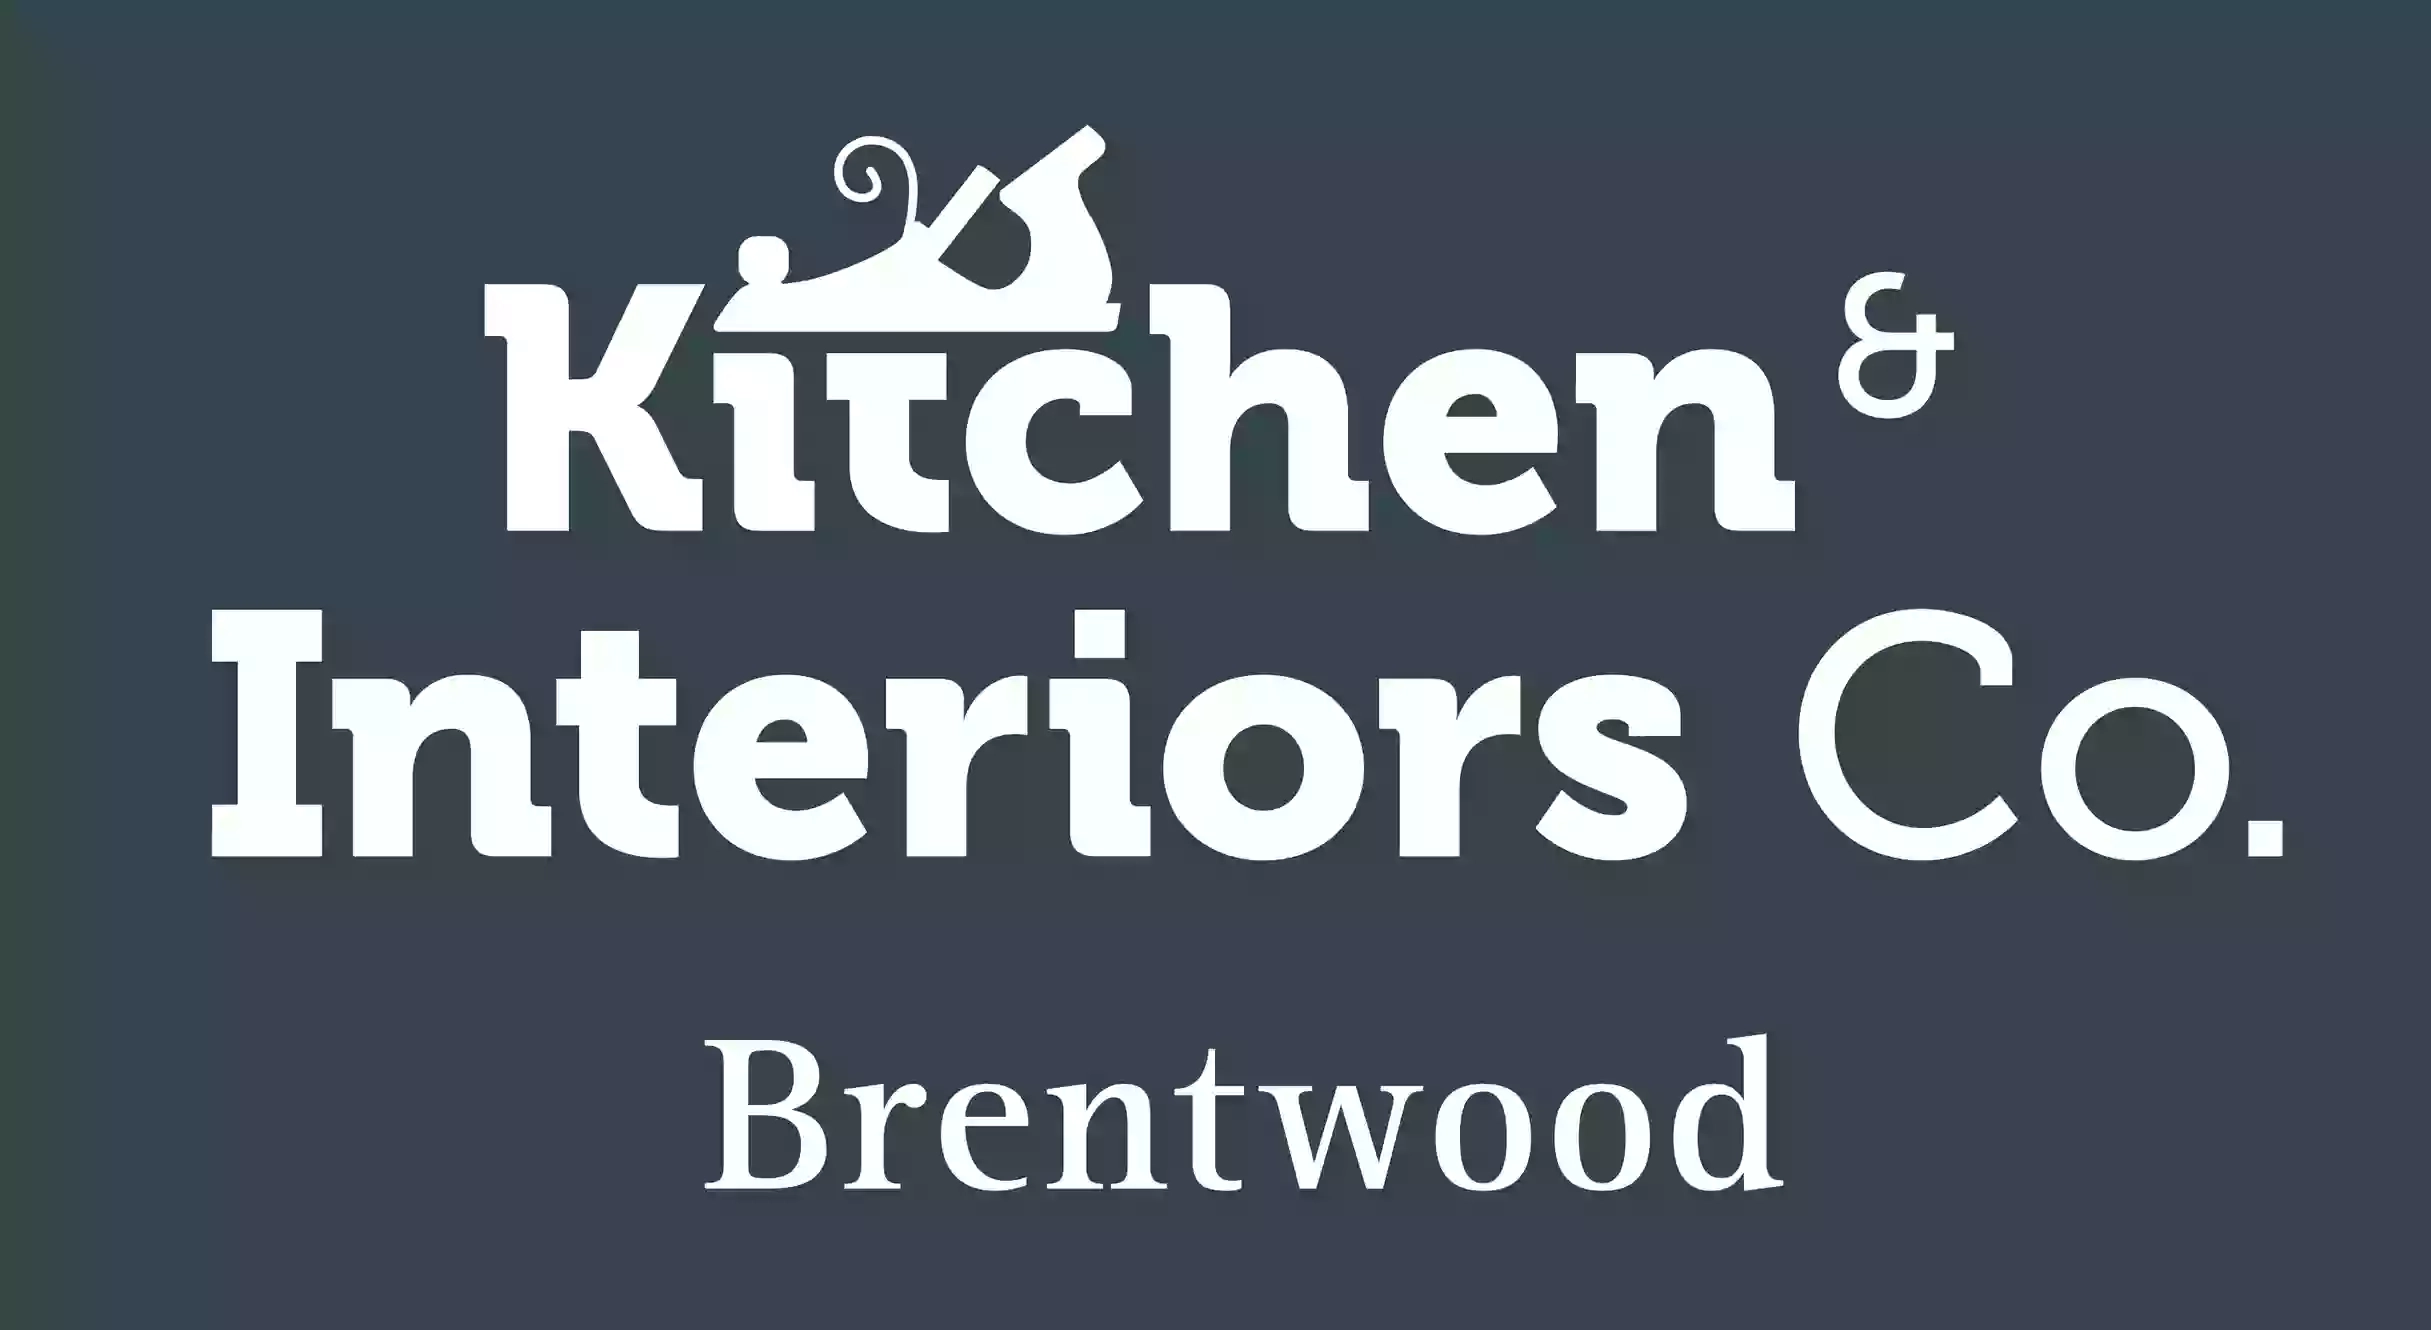 Brentwood Kitchen & Interiors Co. Ltd